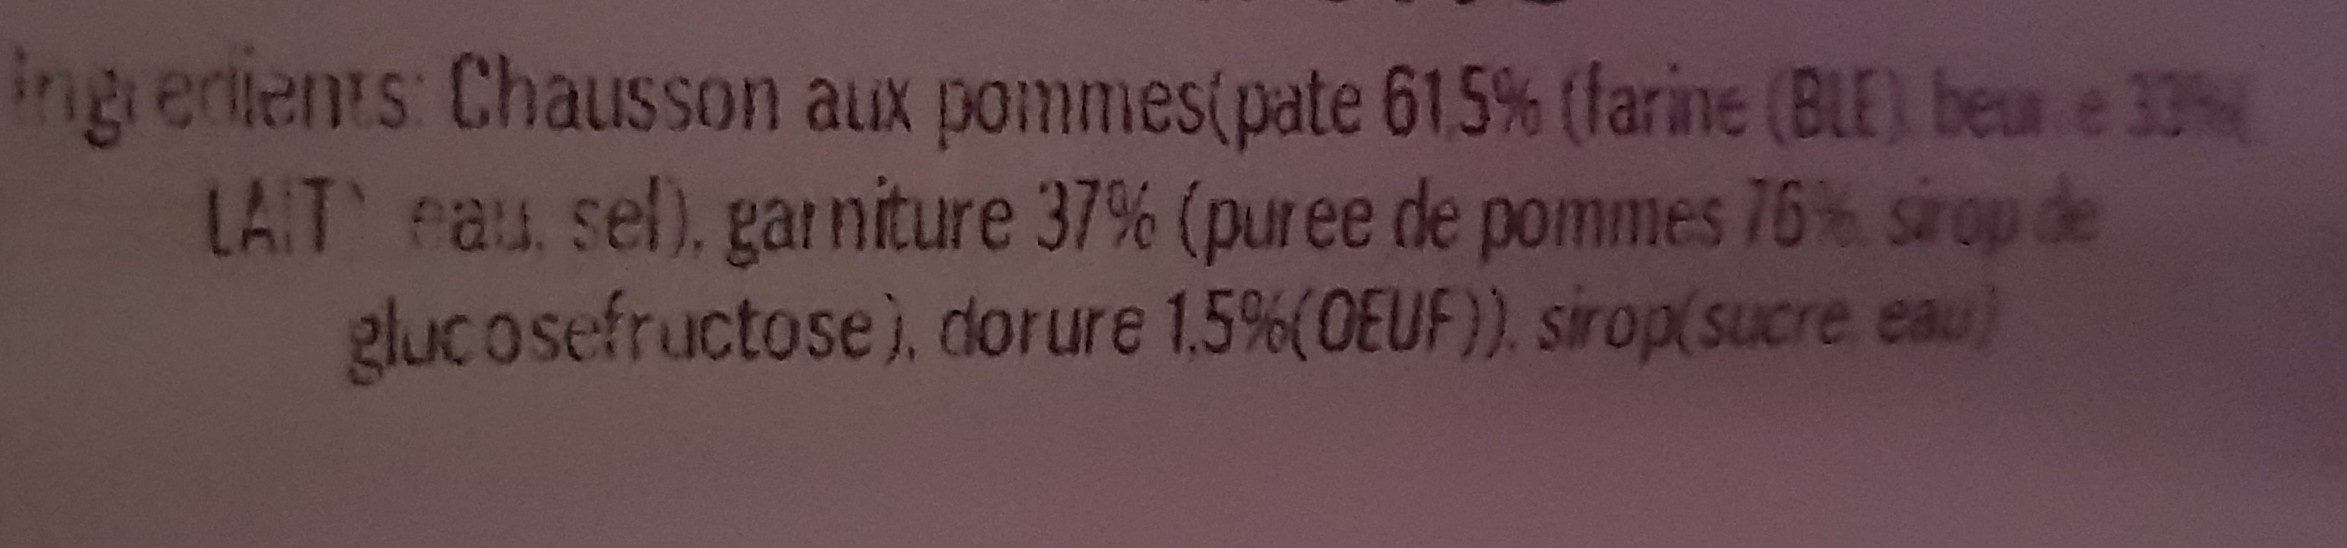 Chausson pomme x4 +2 Offerts - Ingrediënten - fr